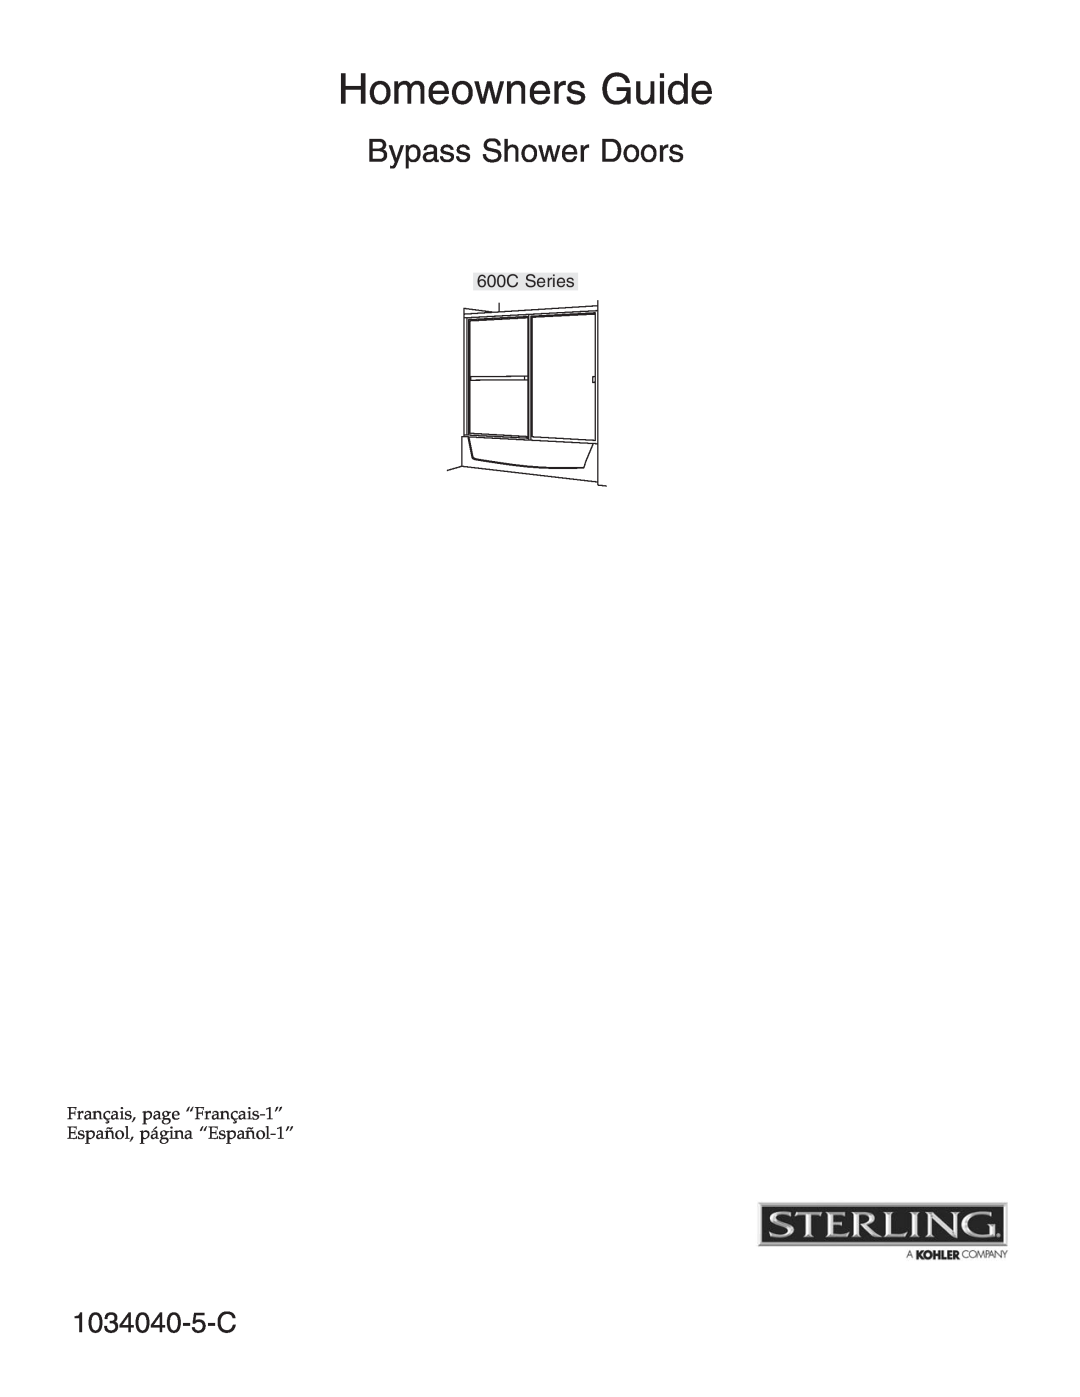 Sterling Plumbing 600C Series manual Homeowners Guide, Bypass Shower Doors, 1034040-5-C 